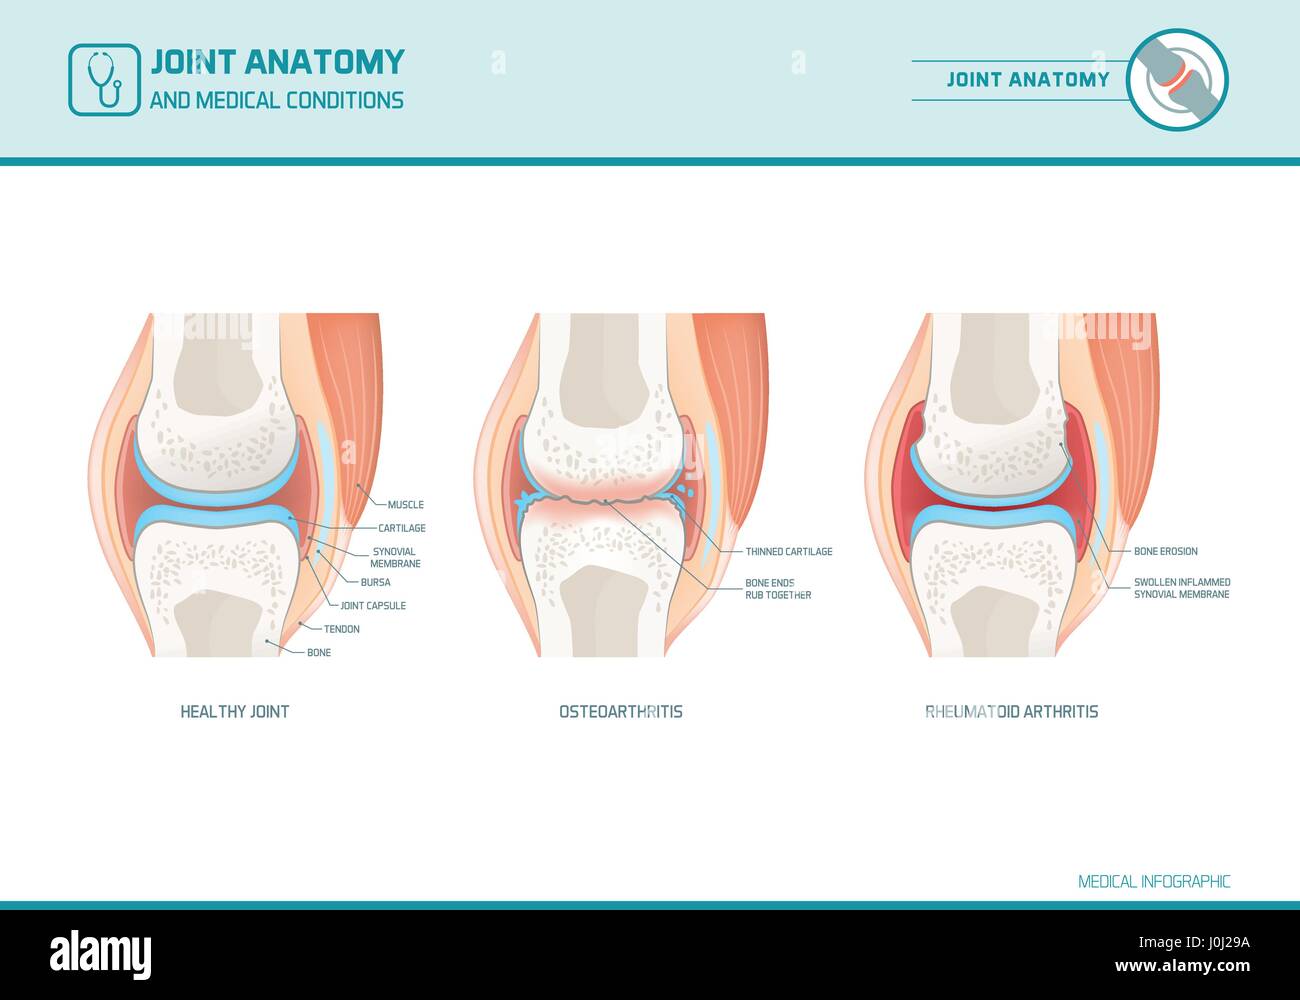 Joint anatomy, osteoarthritis and rheumatoid arthritis infographic with anatomical illustrations Stock Vector